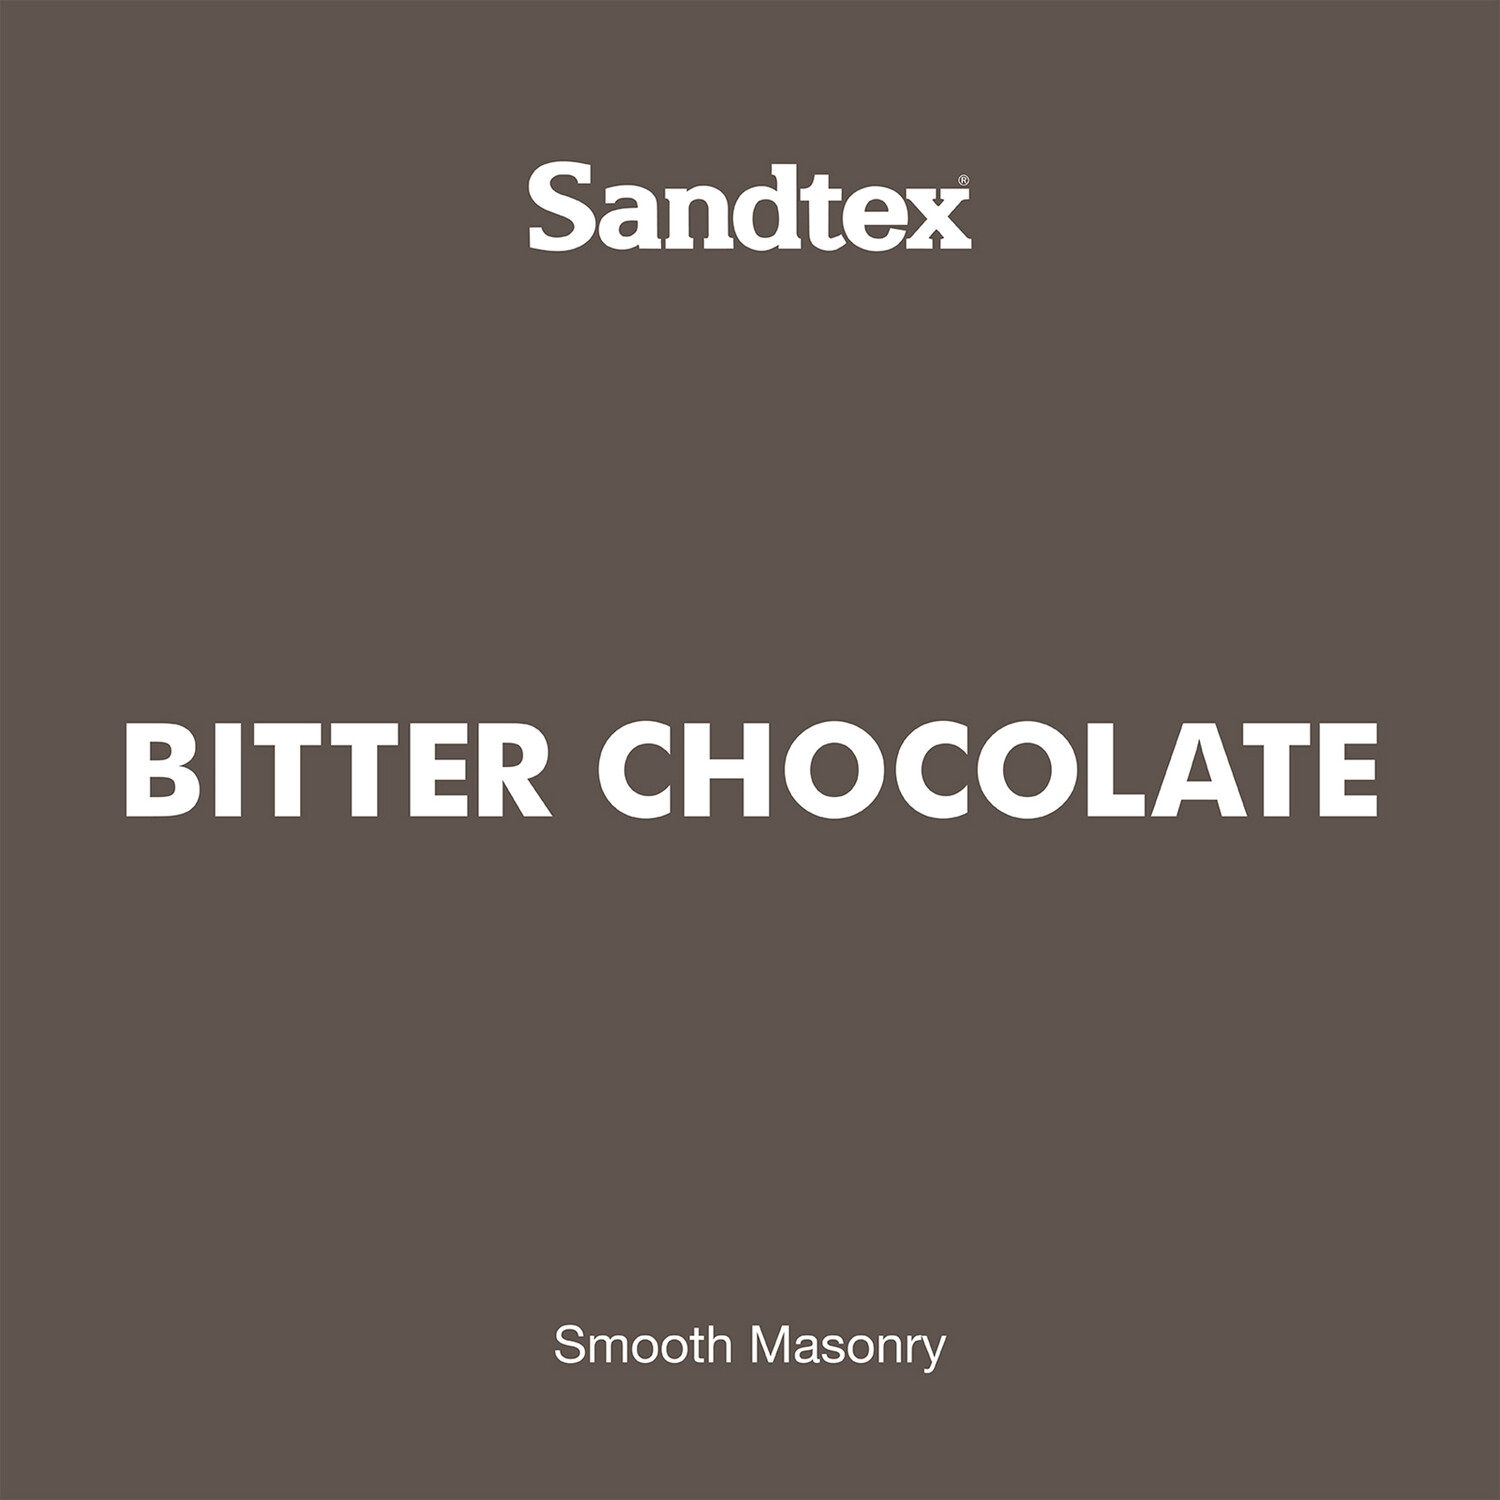 Sandtex Walls Bitter Chocolate Microseal Smooth Masonry Matt Paint 5L Image 8